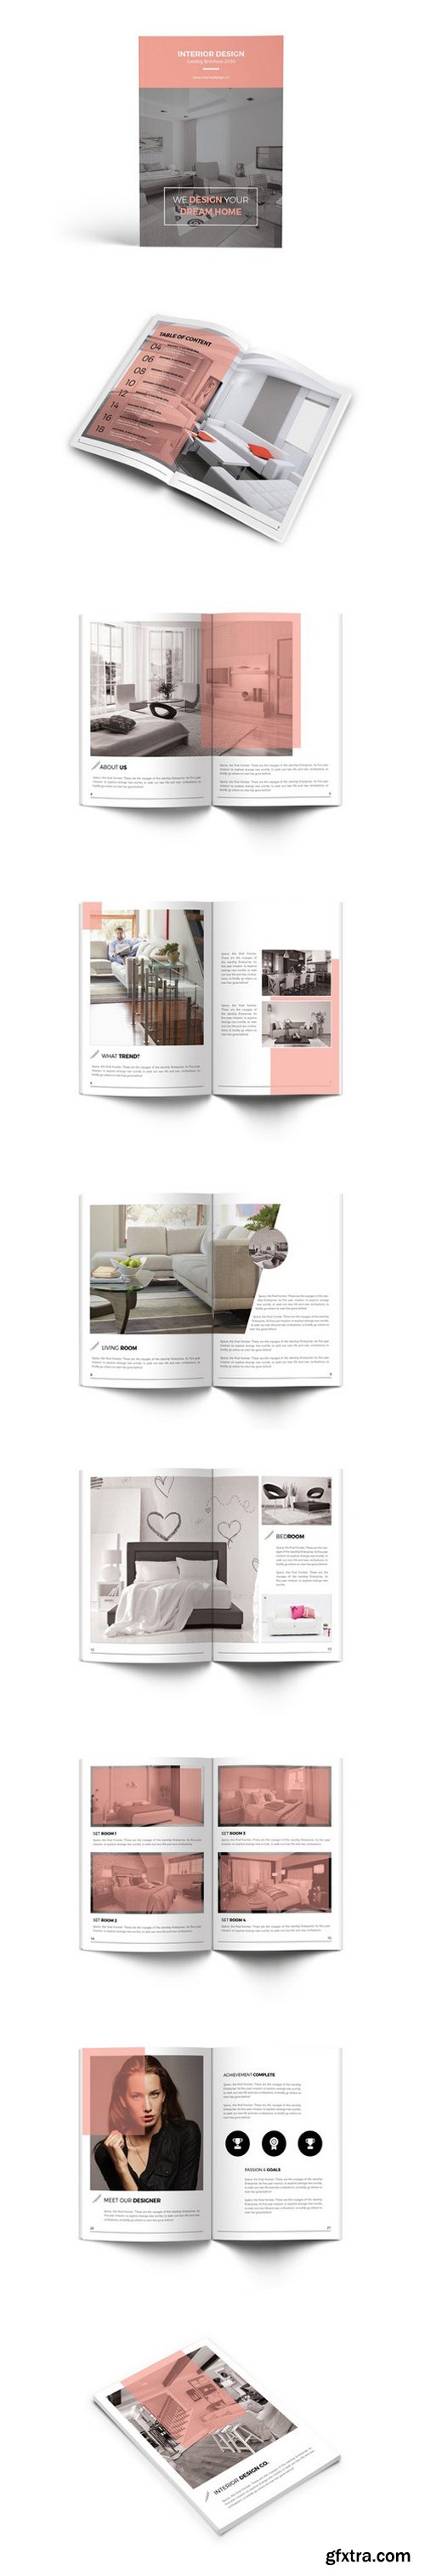 CM - Interior Design Catalog Brochure 931778